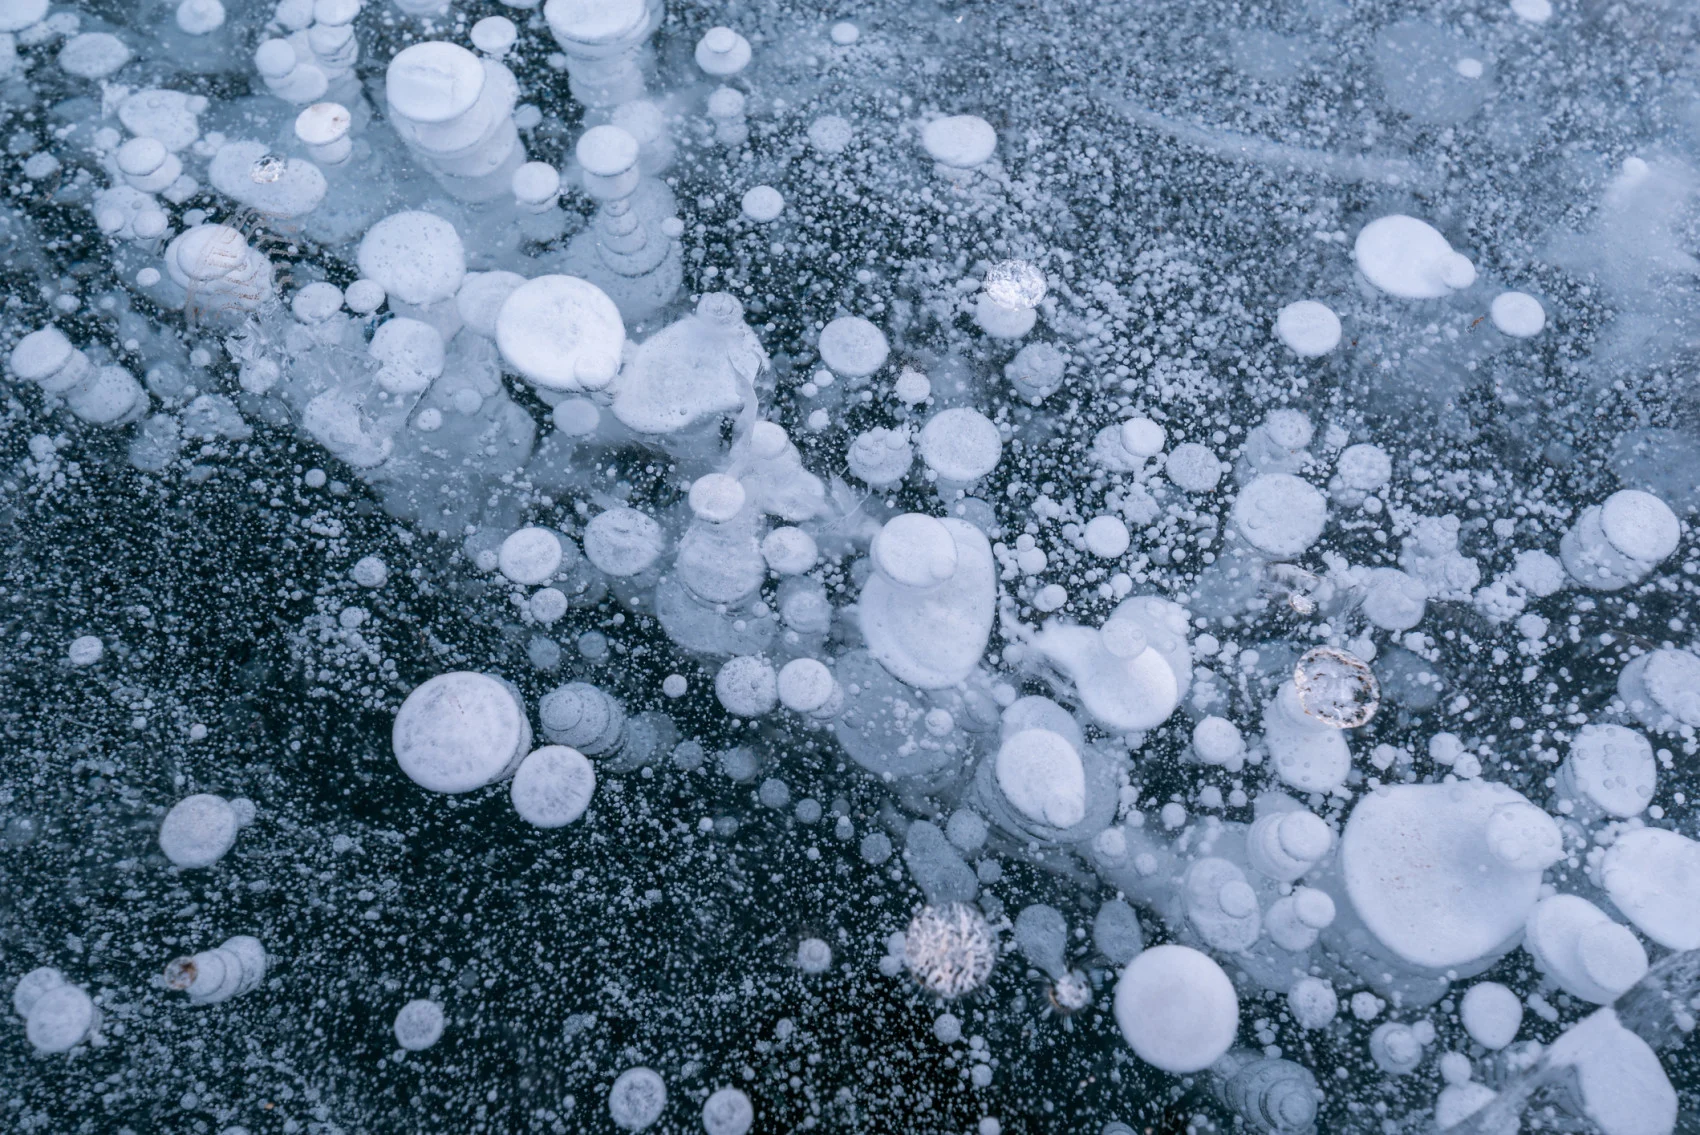 Methane "belching" lakes discovered in Alaska as permafrost thaws